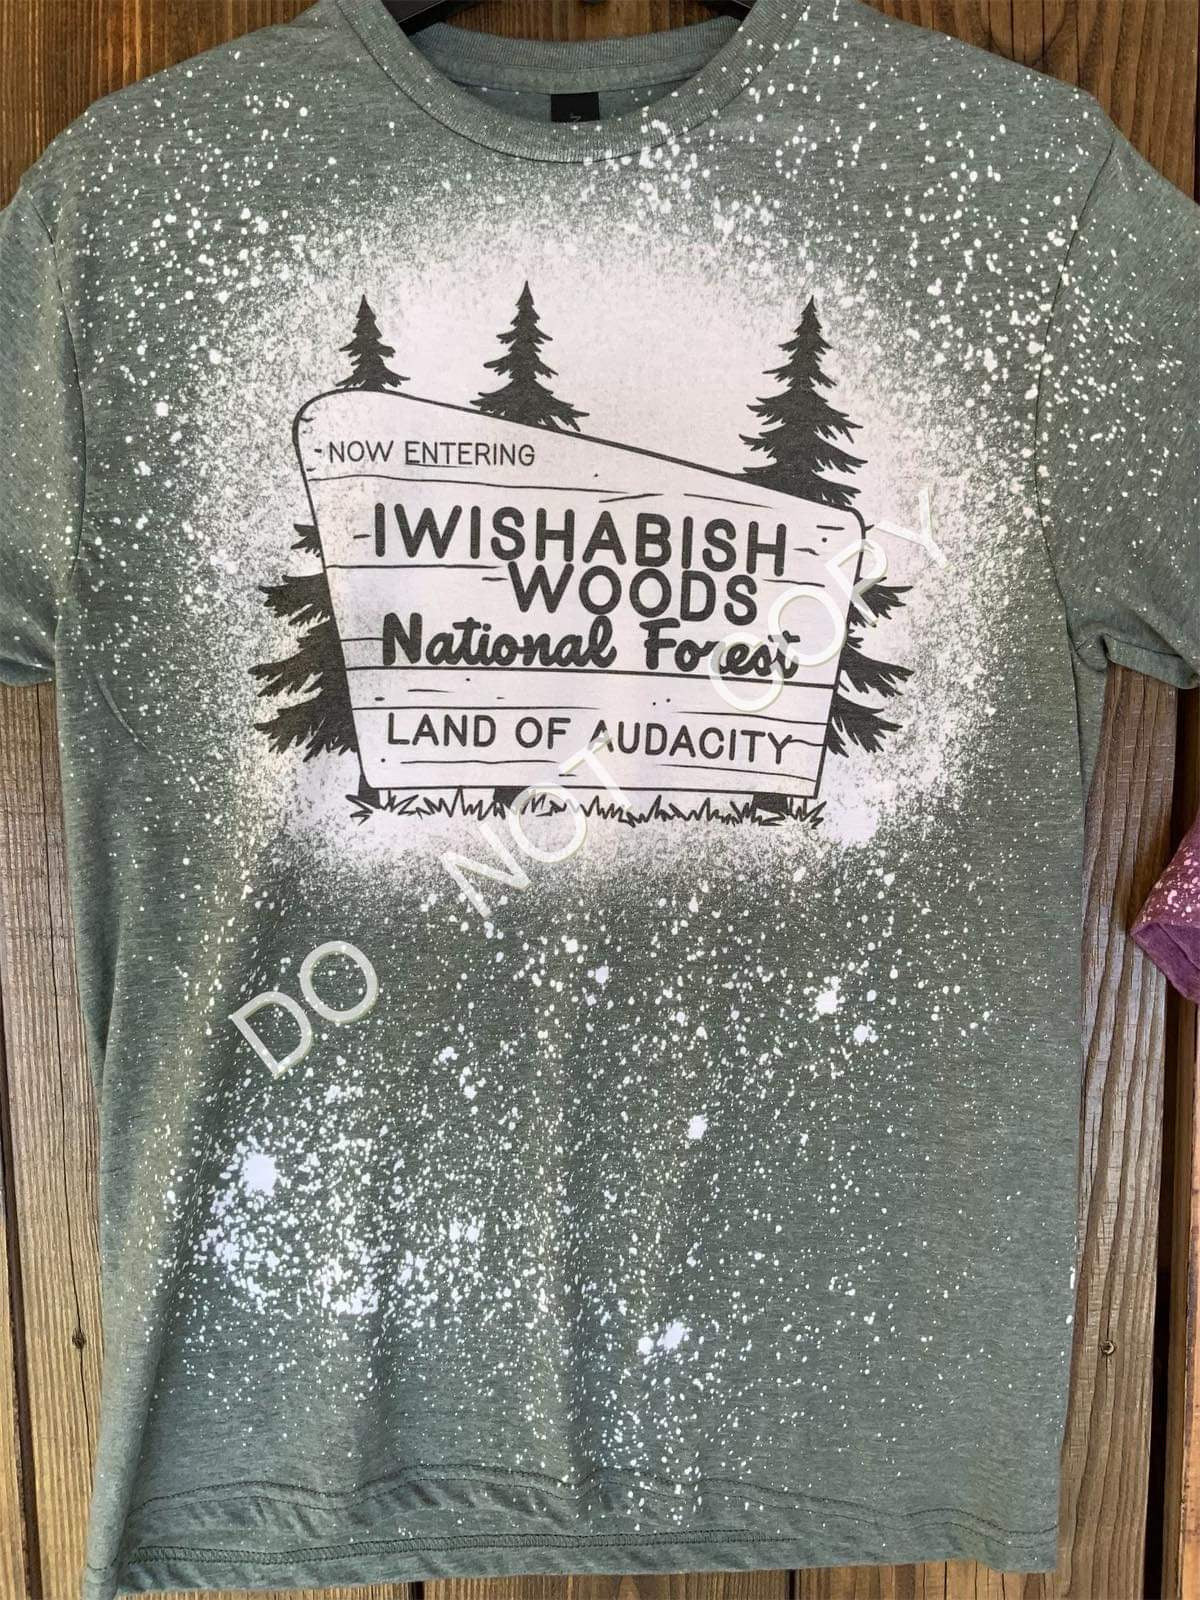 Iwishabish woods - BLEACHED TSHIRT